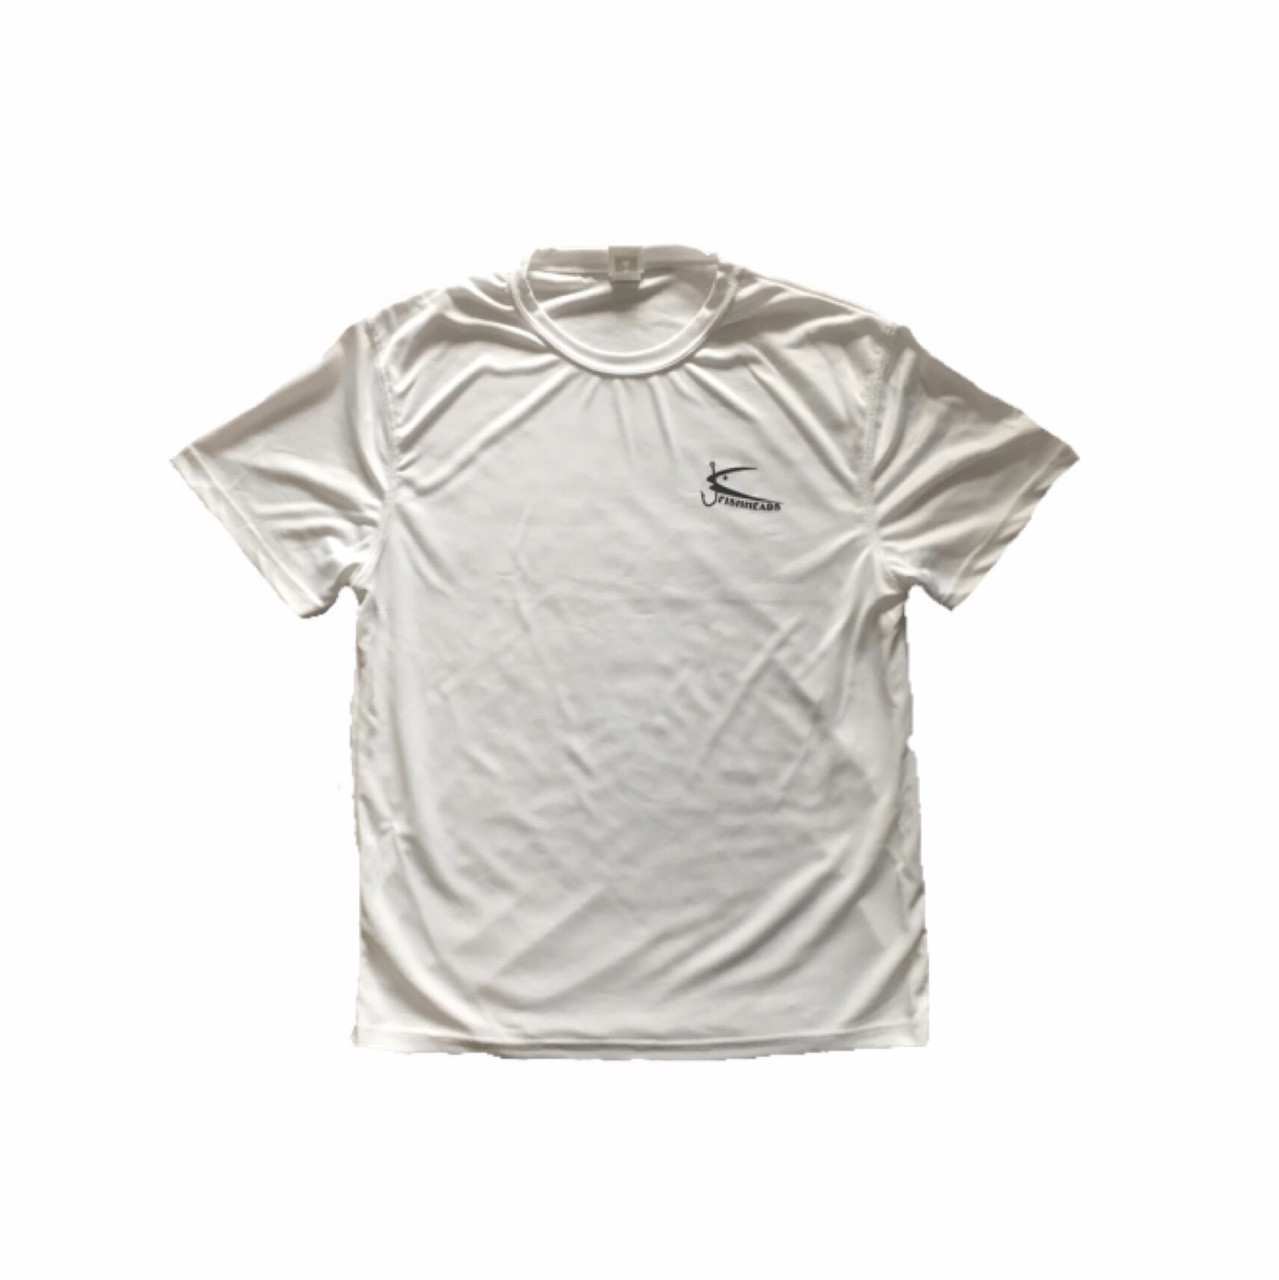 Fishheads Dry Fit T-Shirt